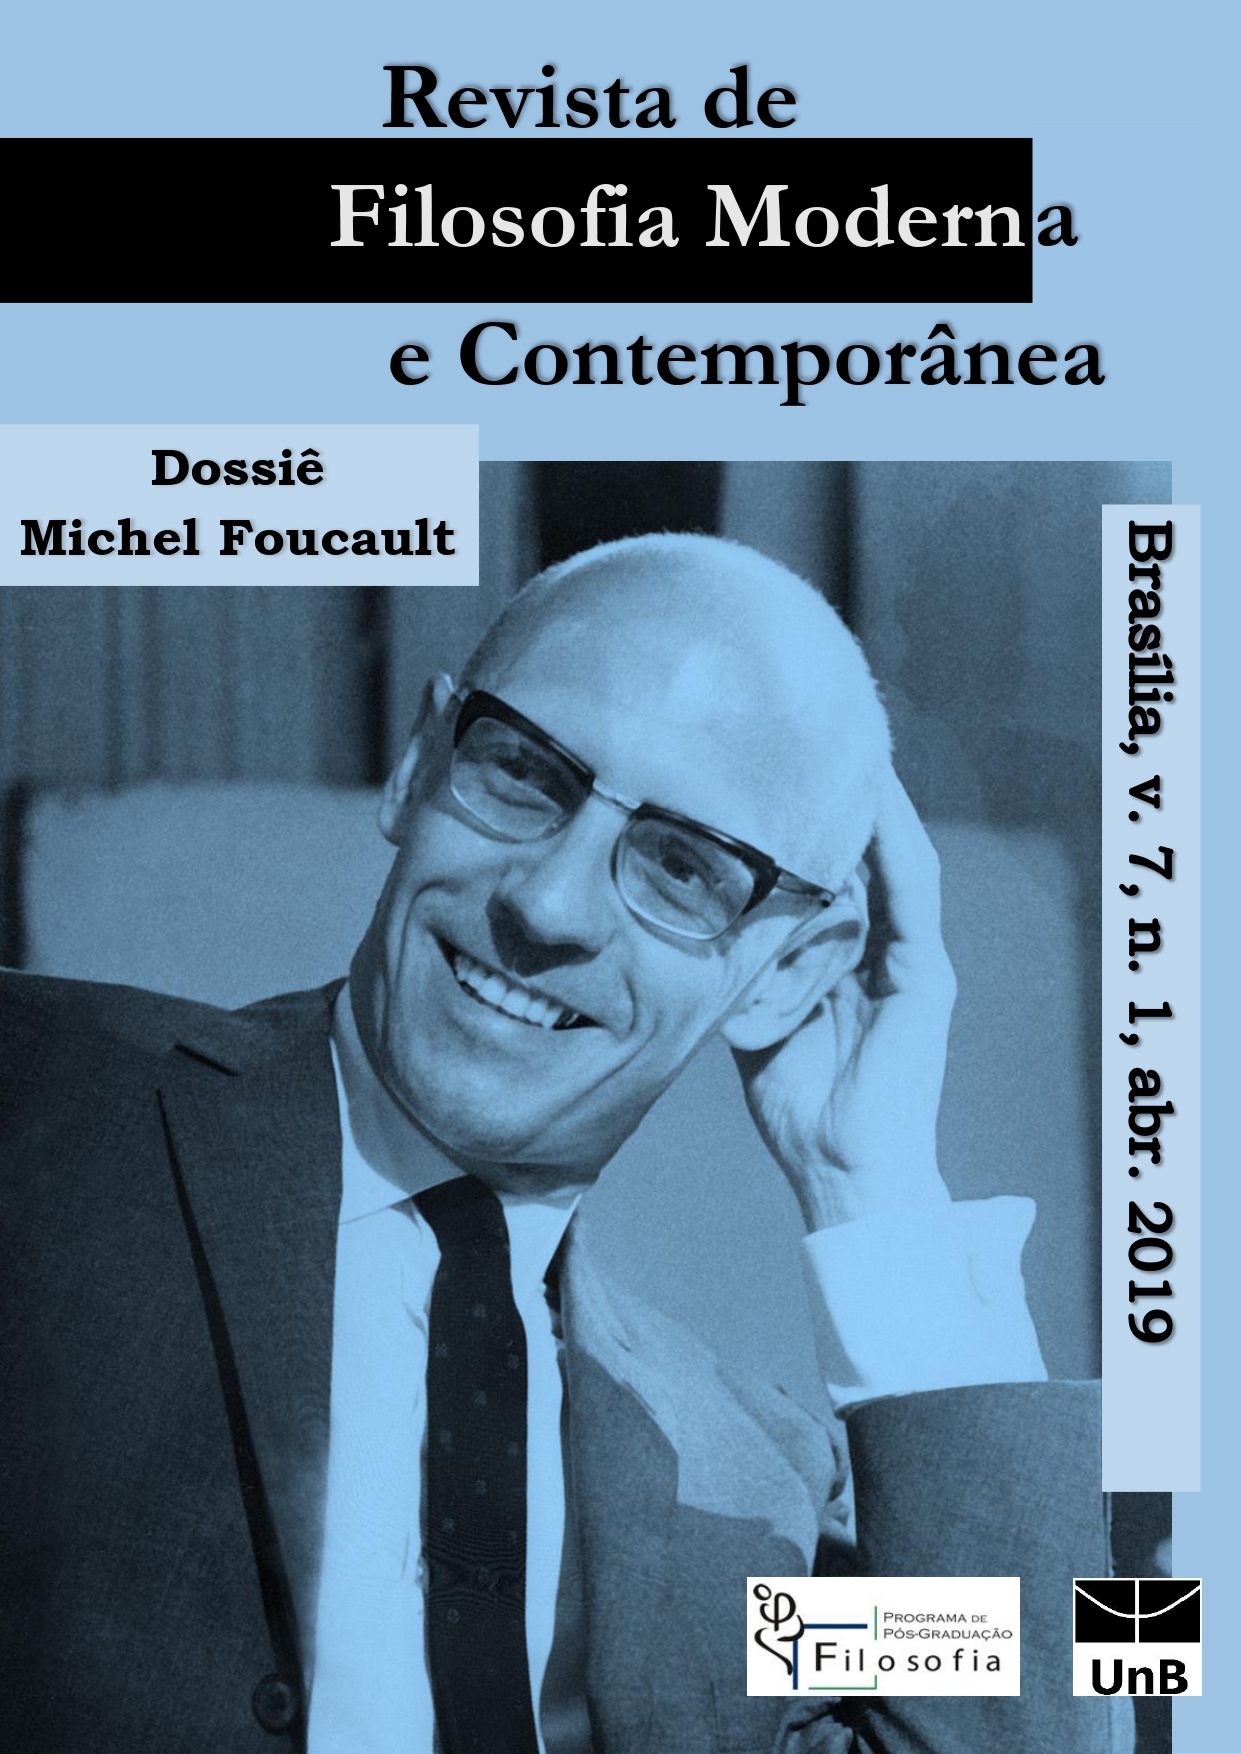 					Ver Vol. 7 Núm. 1 (2019): Dossiê "Michel Foucault"
				